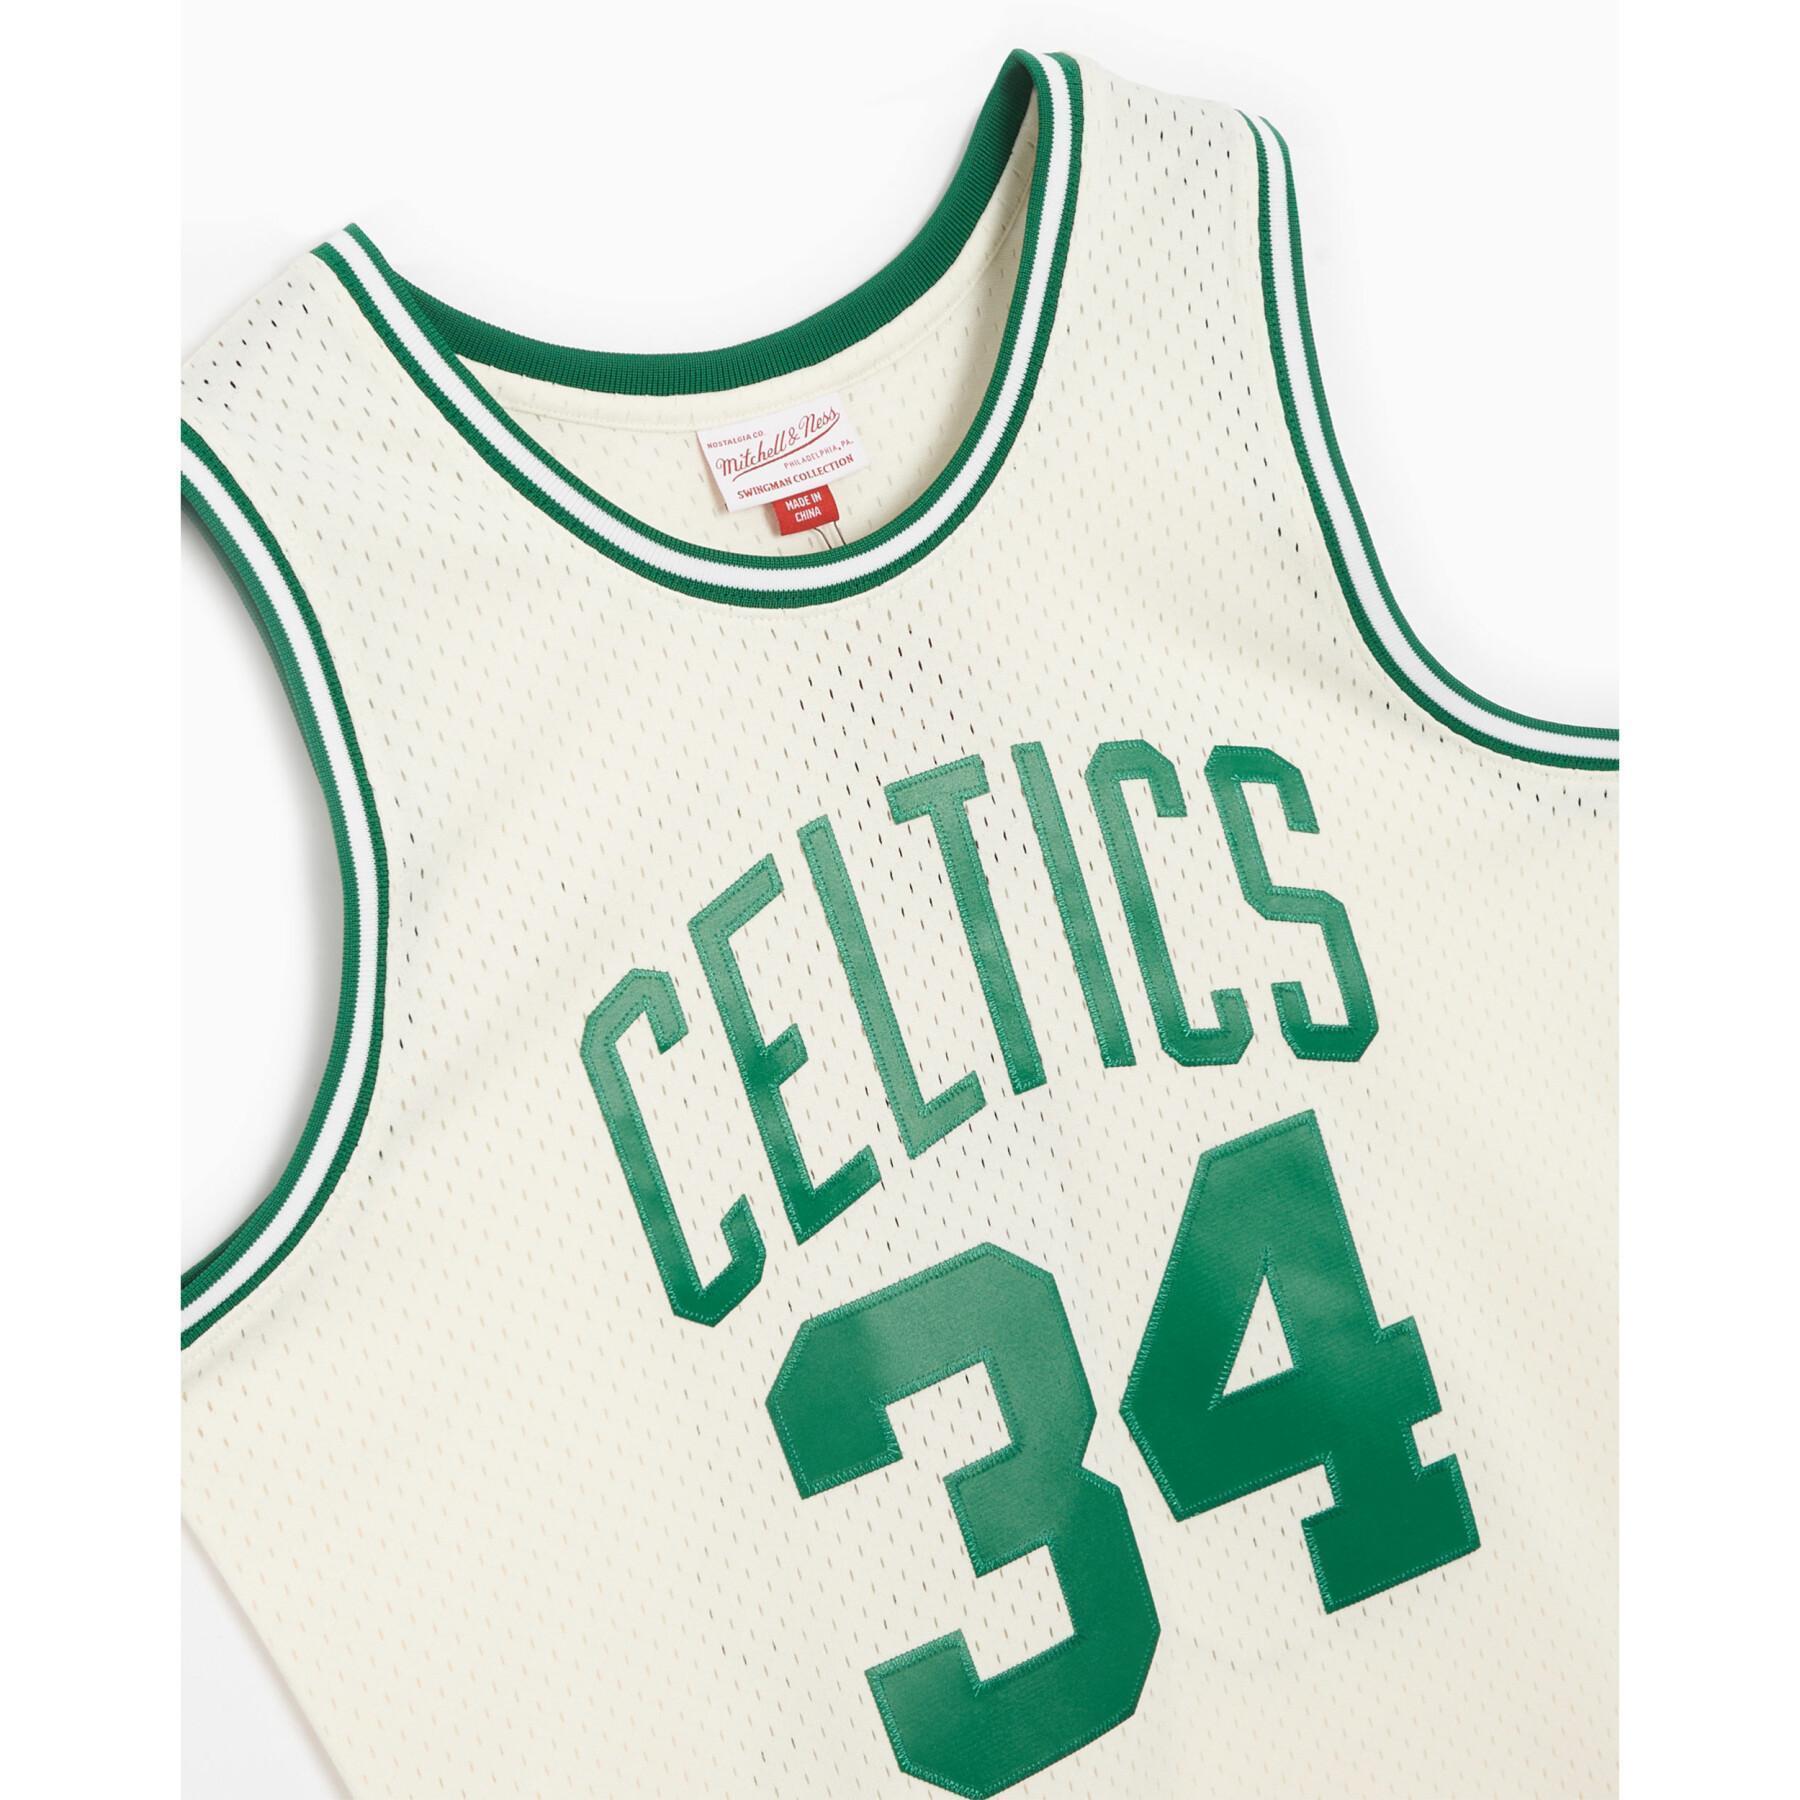 Maillot Boston Celtics Paul Pierce NBA 2007